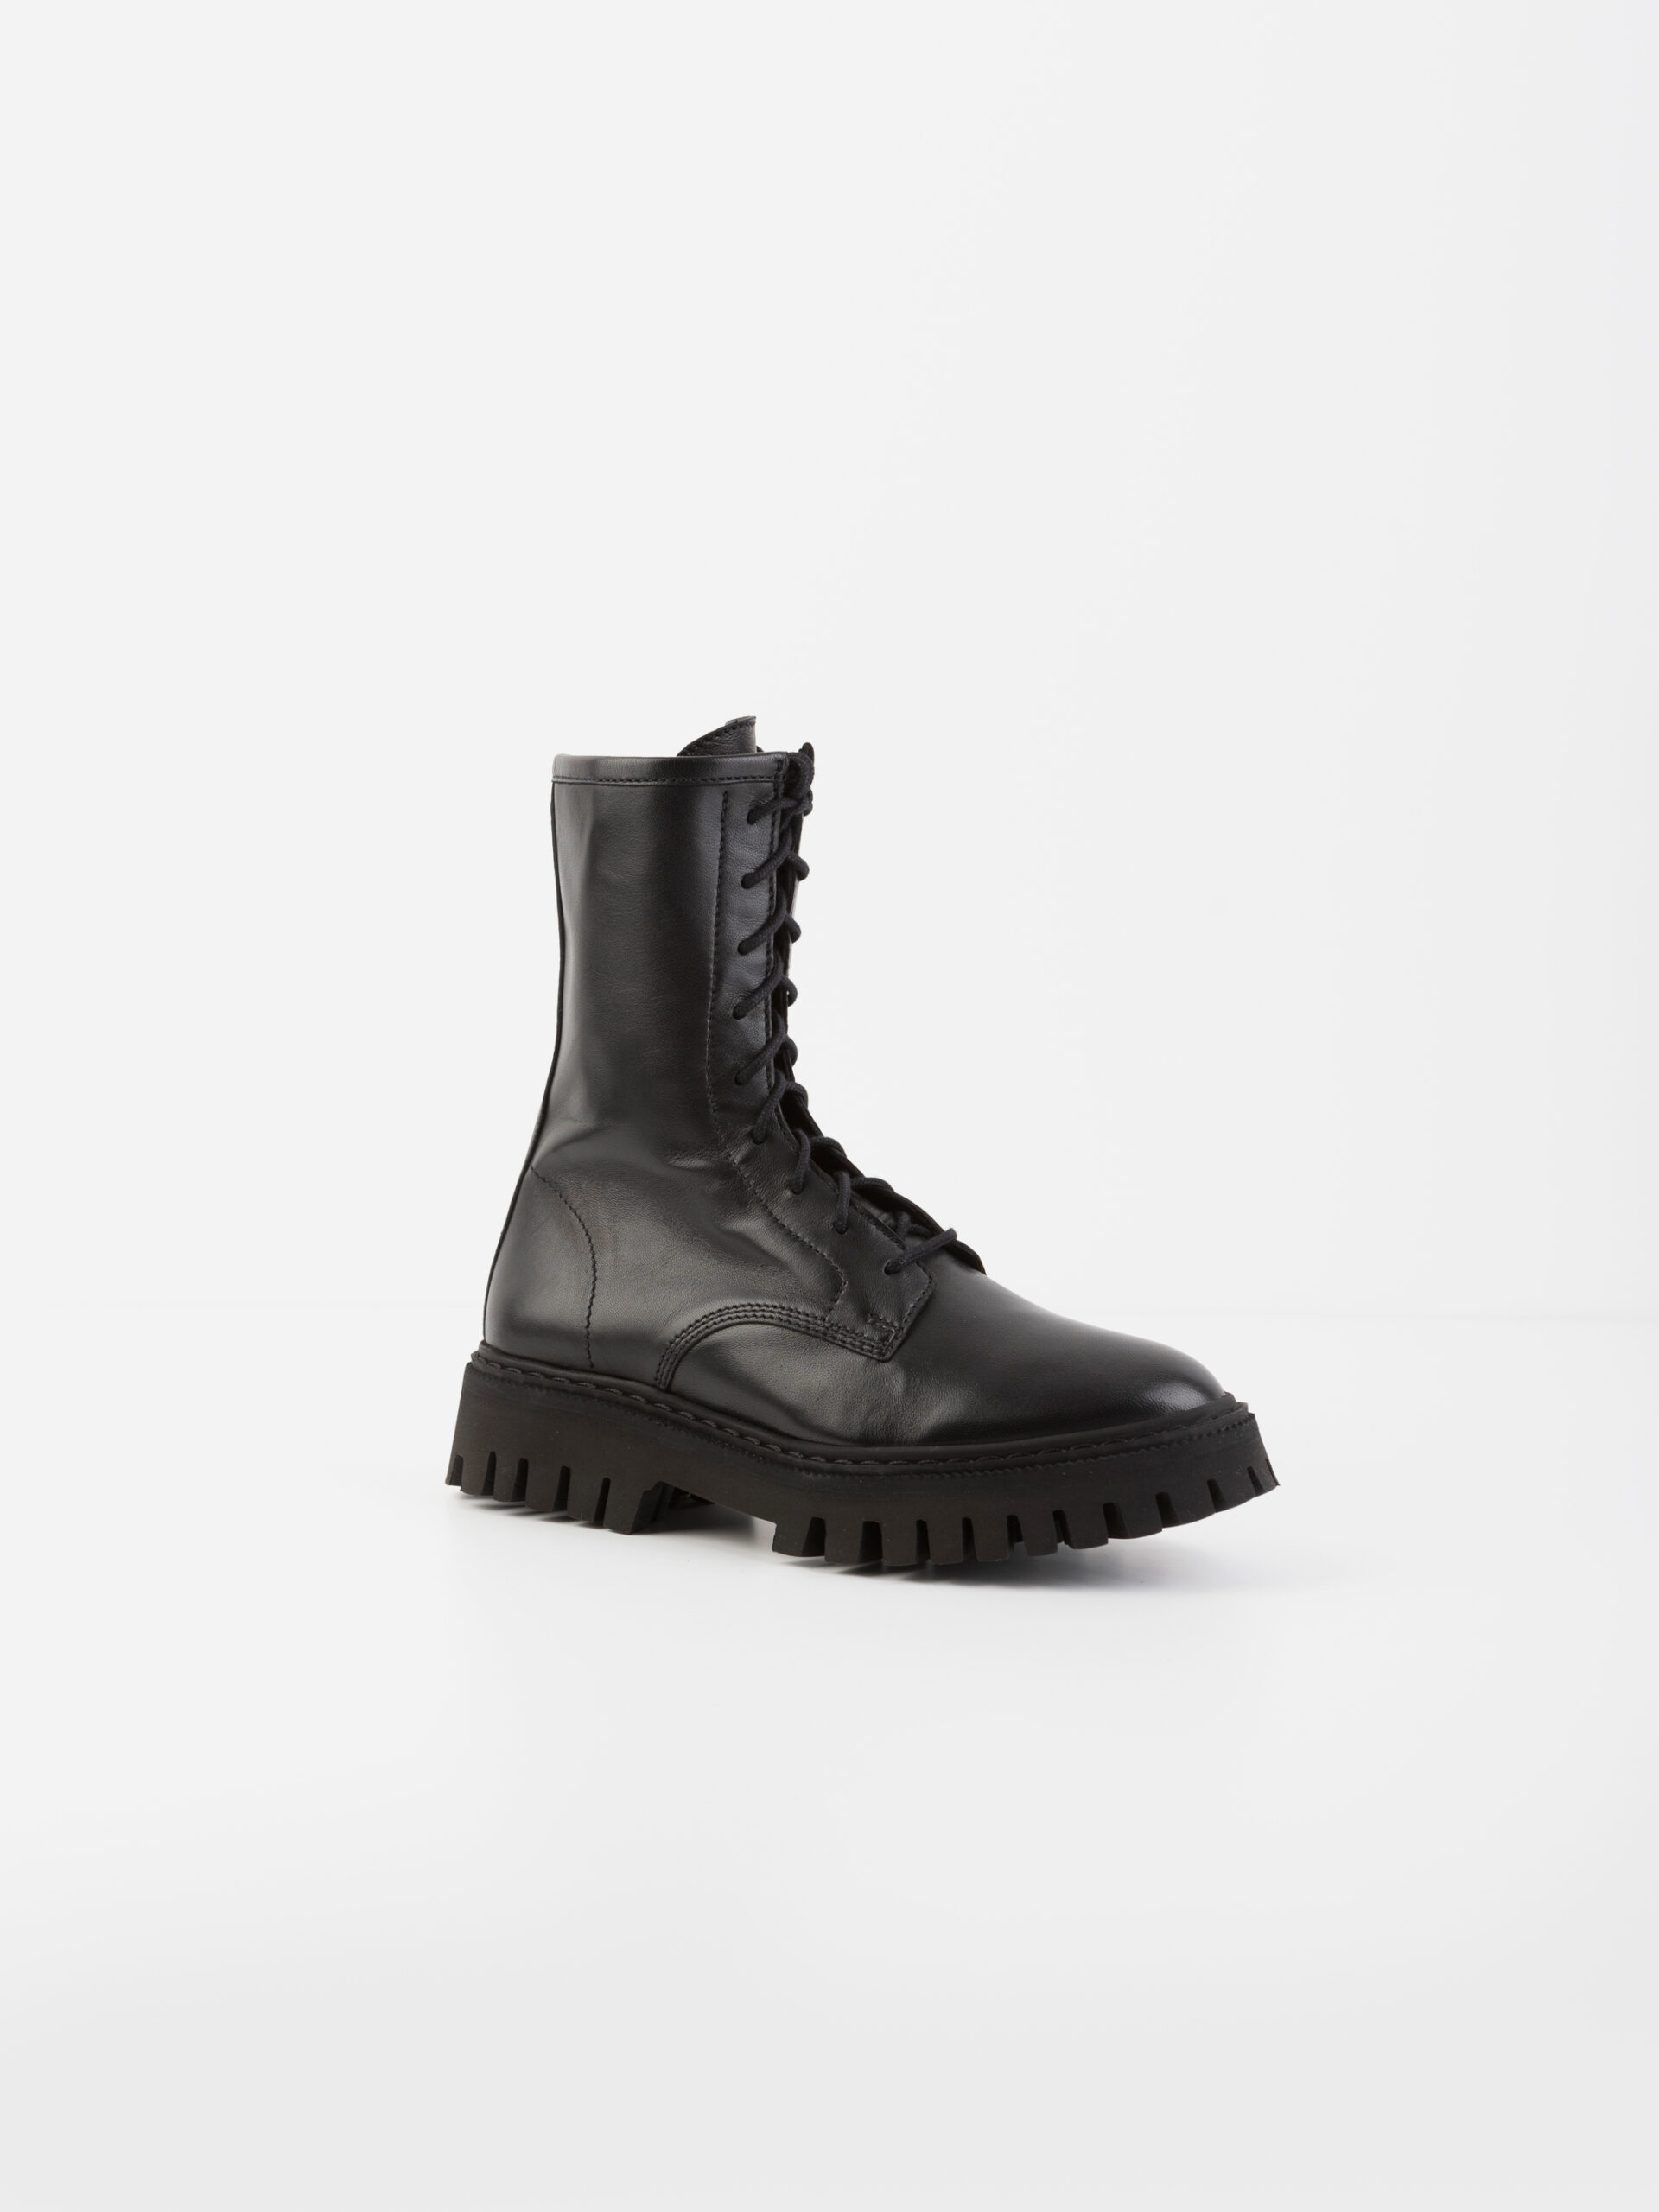 kosmic-ranger-black-leather-boots-lace-zipper-ridged-sole-iro-matchboxathens